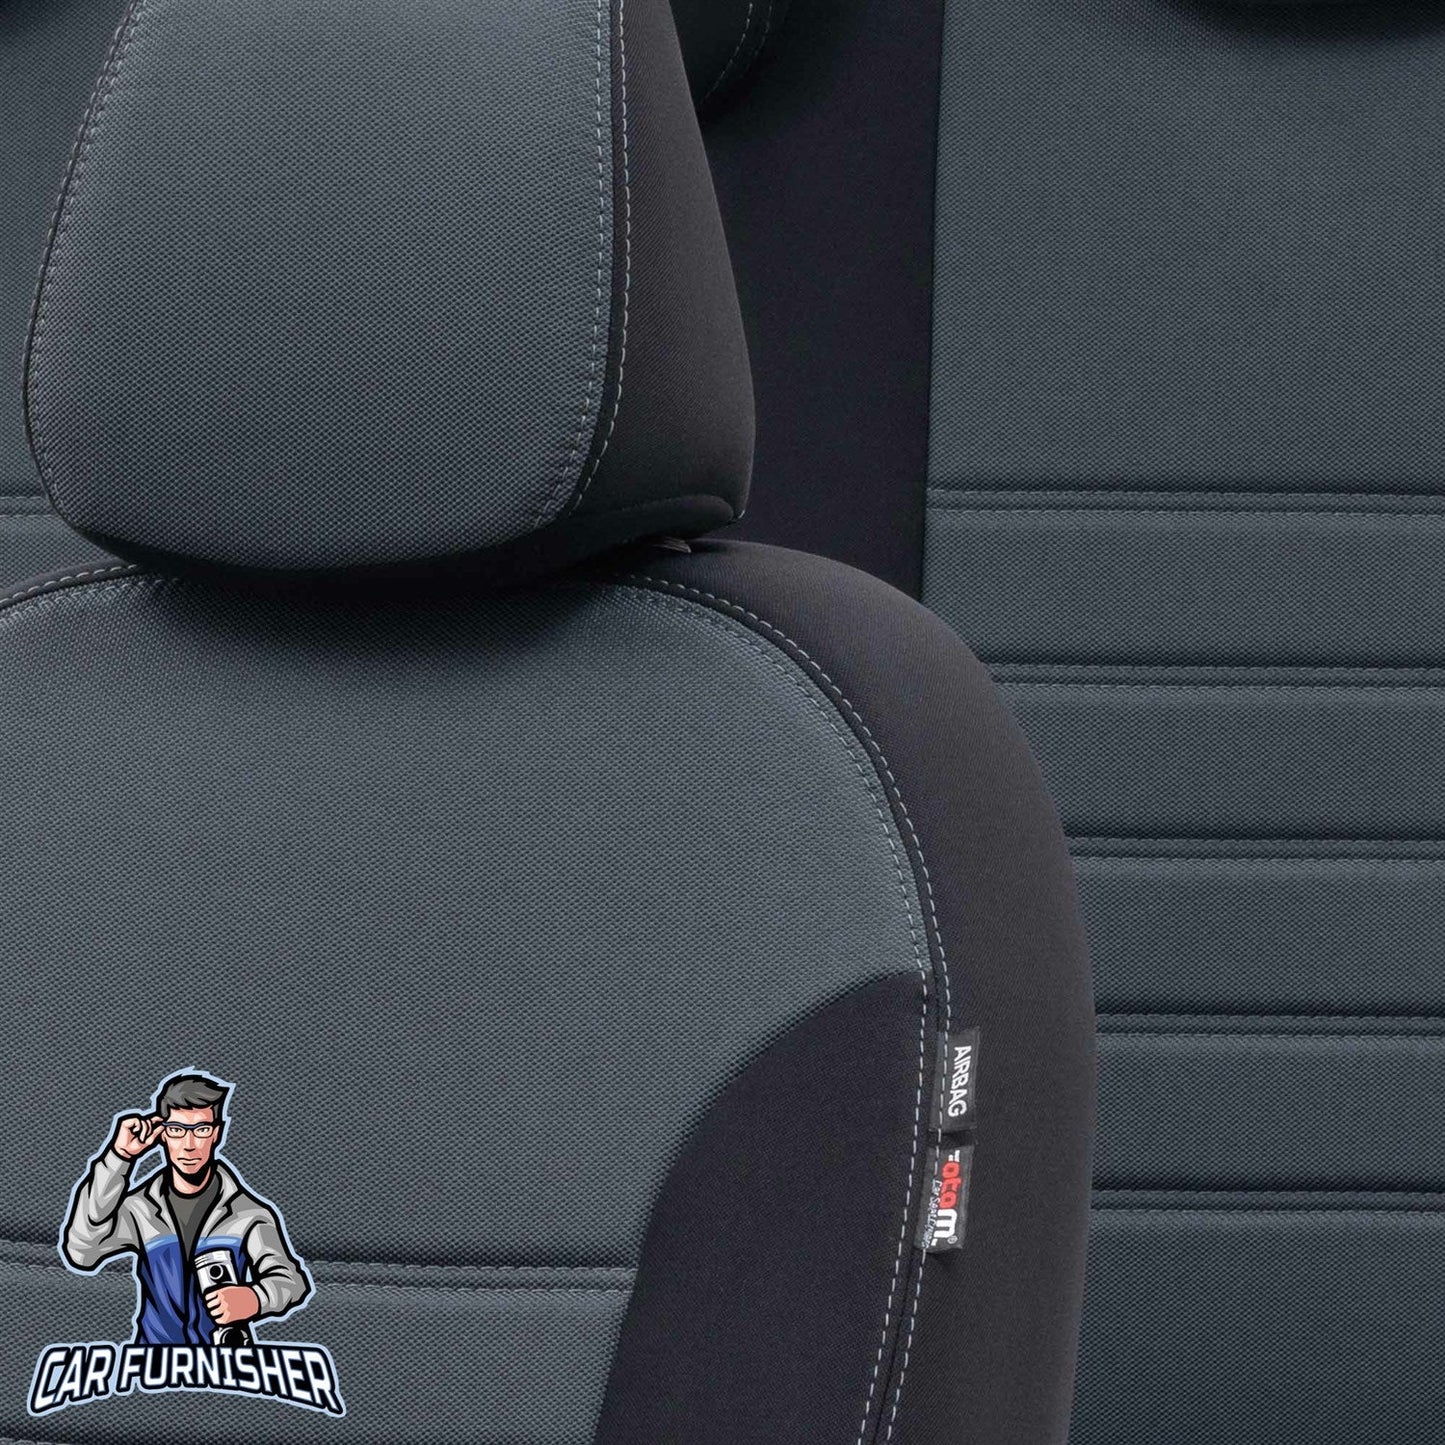 Volkswagen Crafter Seat Cover Original Jacquard Design Smoked Black Jacquard Fabric